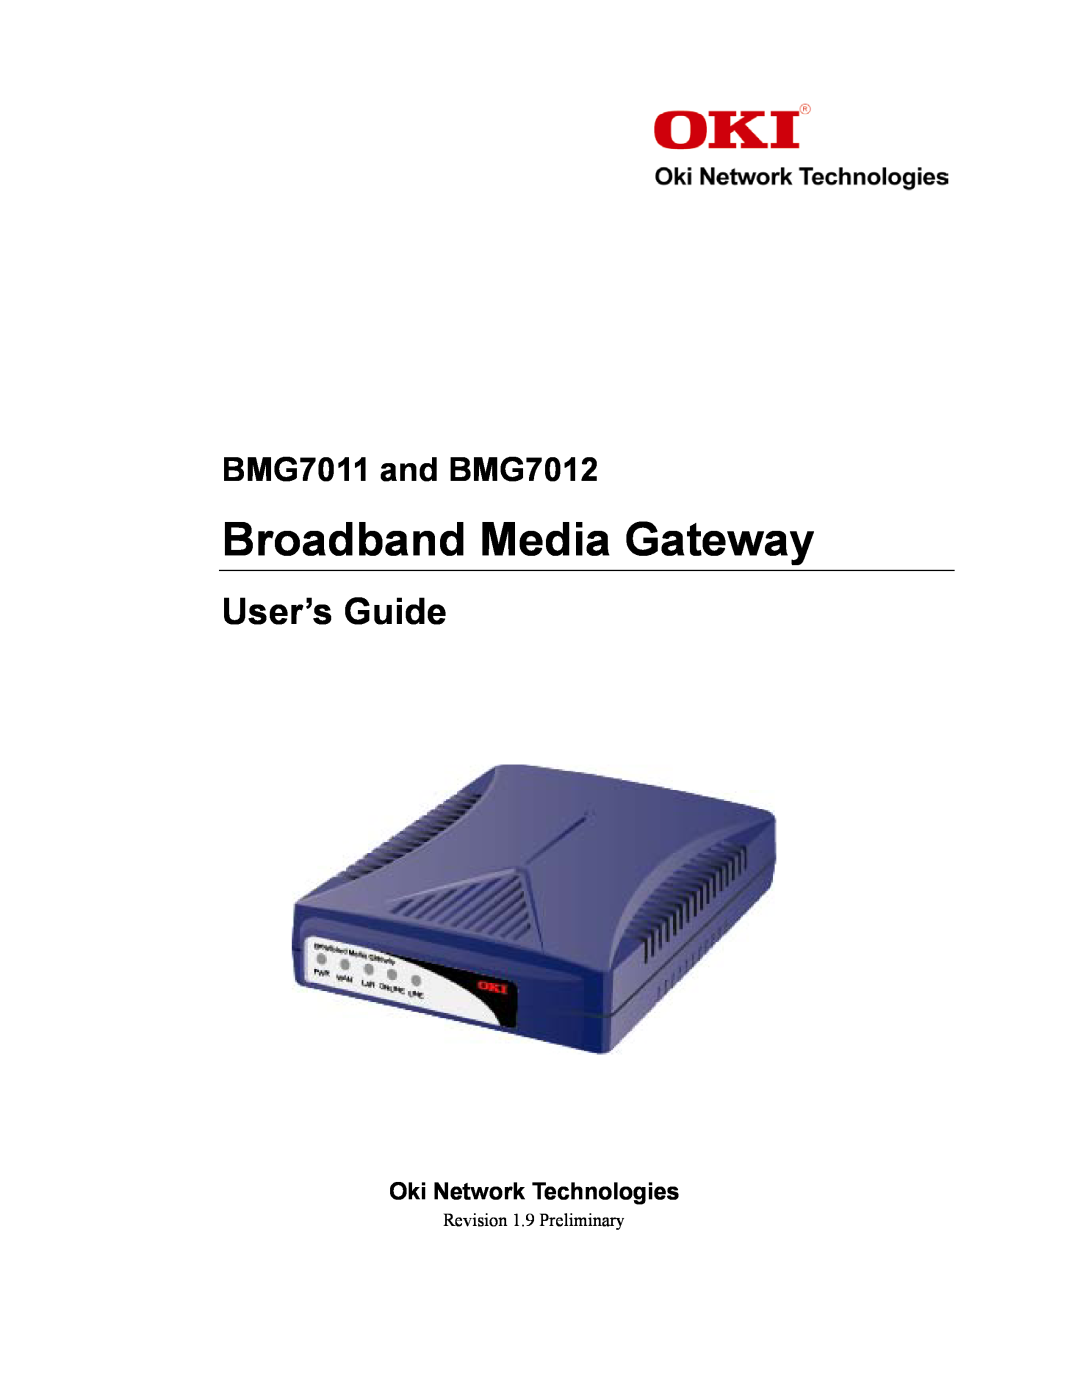 Oki manual BMG7011 and BMG7012, Broadband Media Gateway, User’s Guide, Oki Network Technologies 